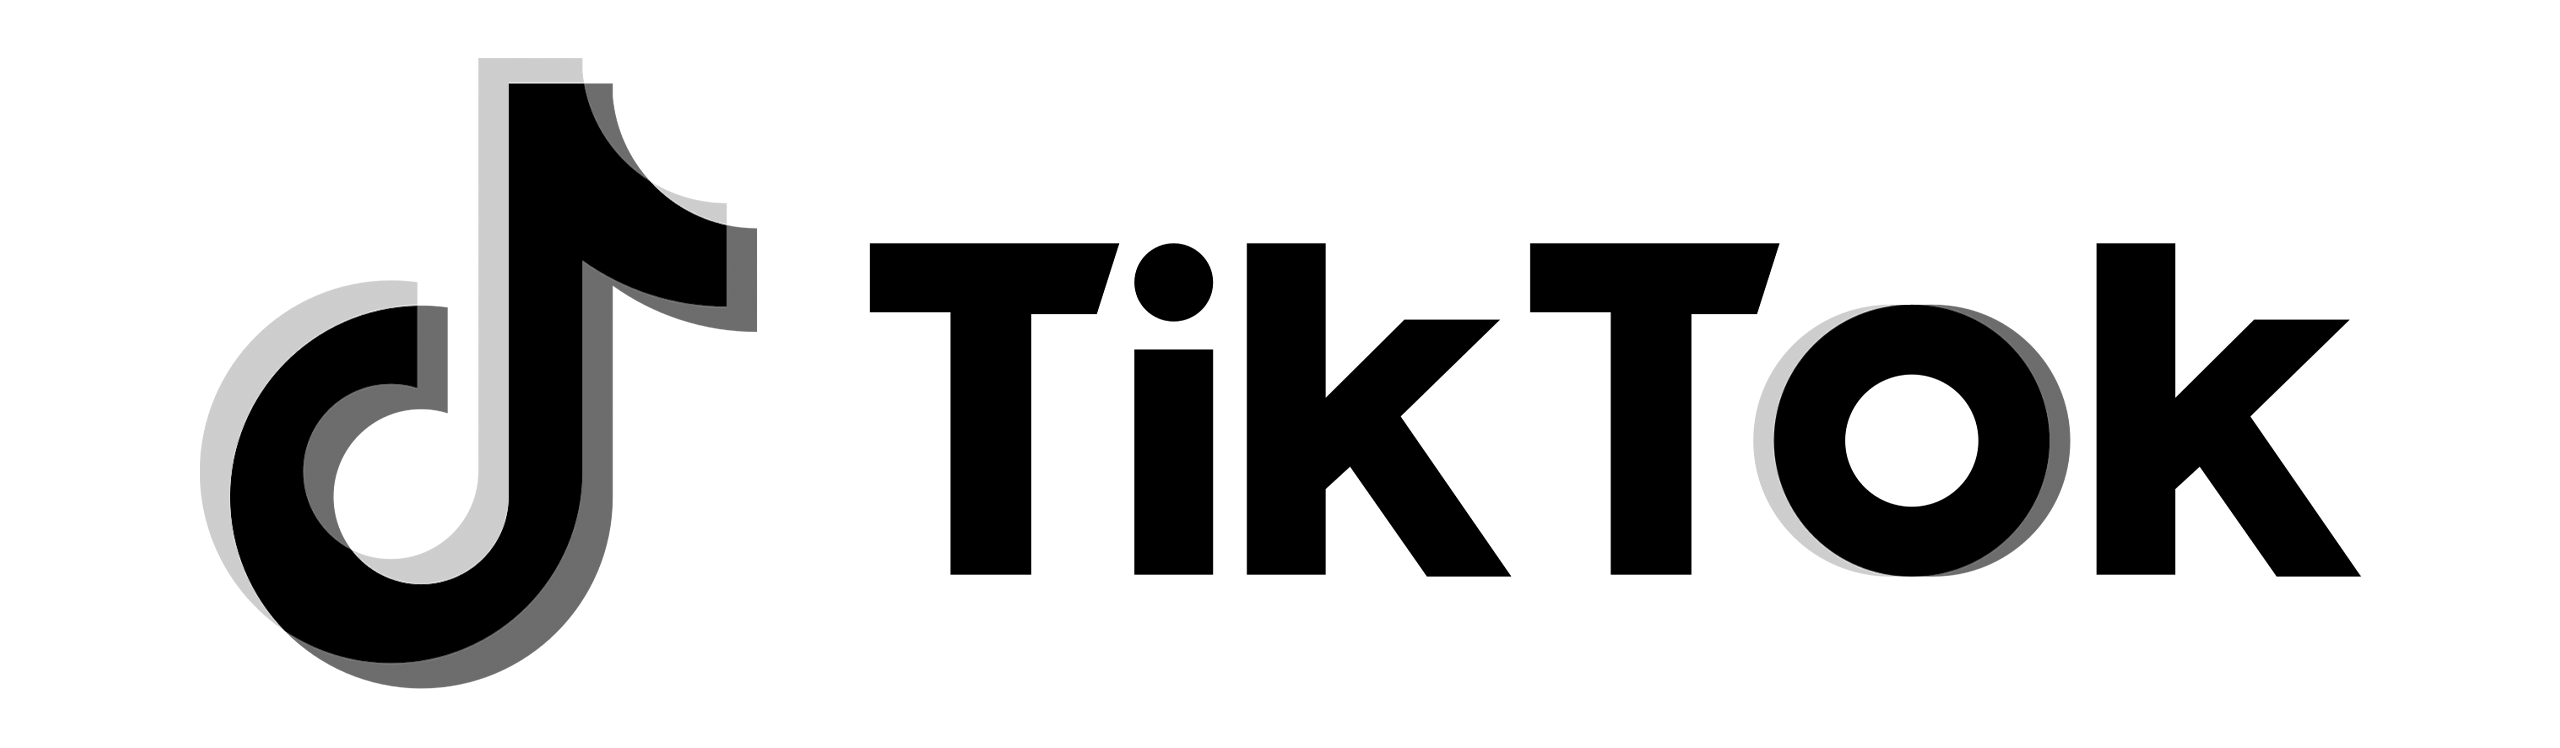 tiktok-logo-bw